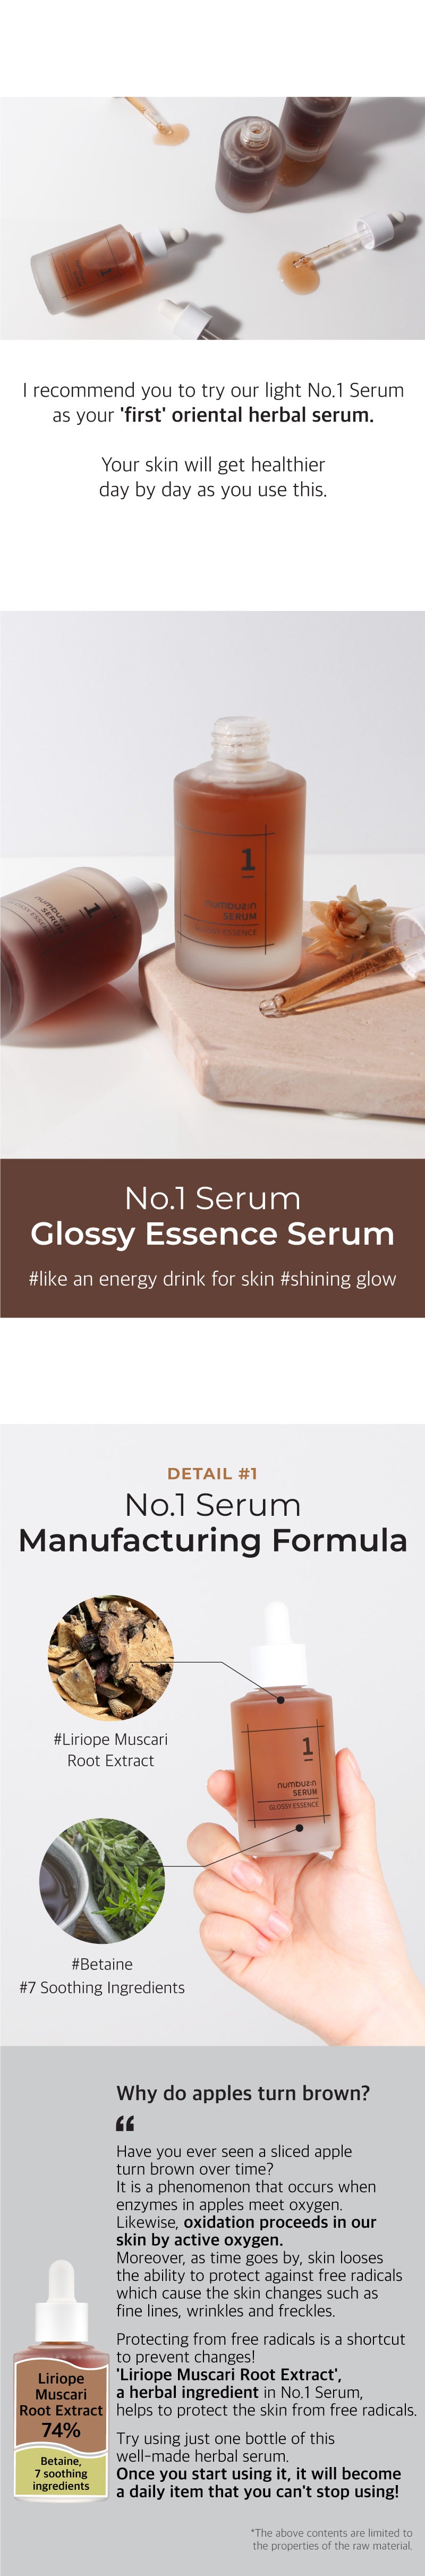 Pamphlet image of No.1 Glossy Essence Serum (4)